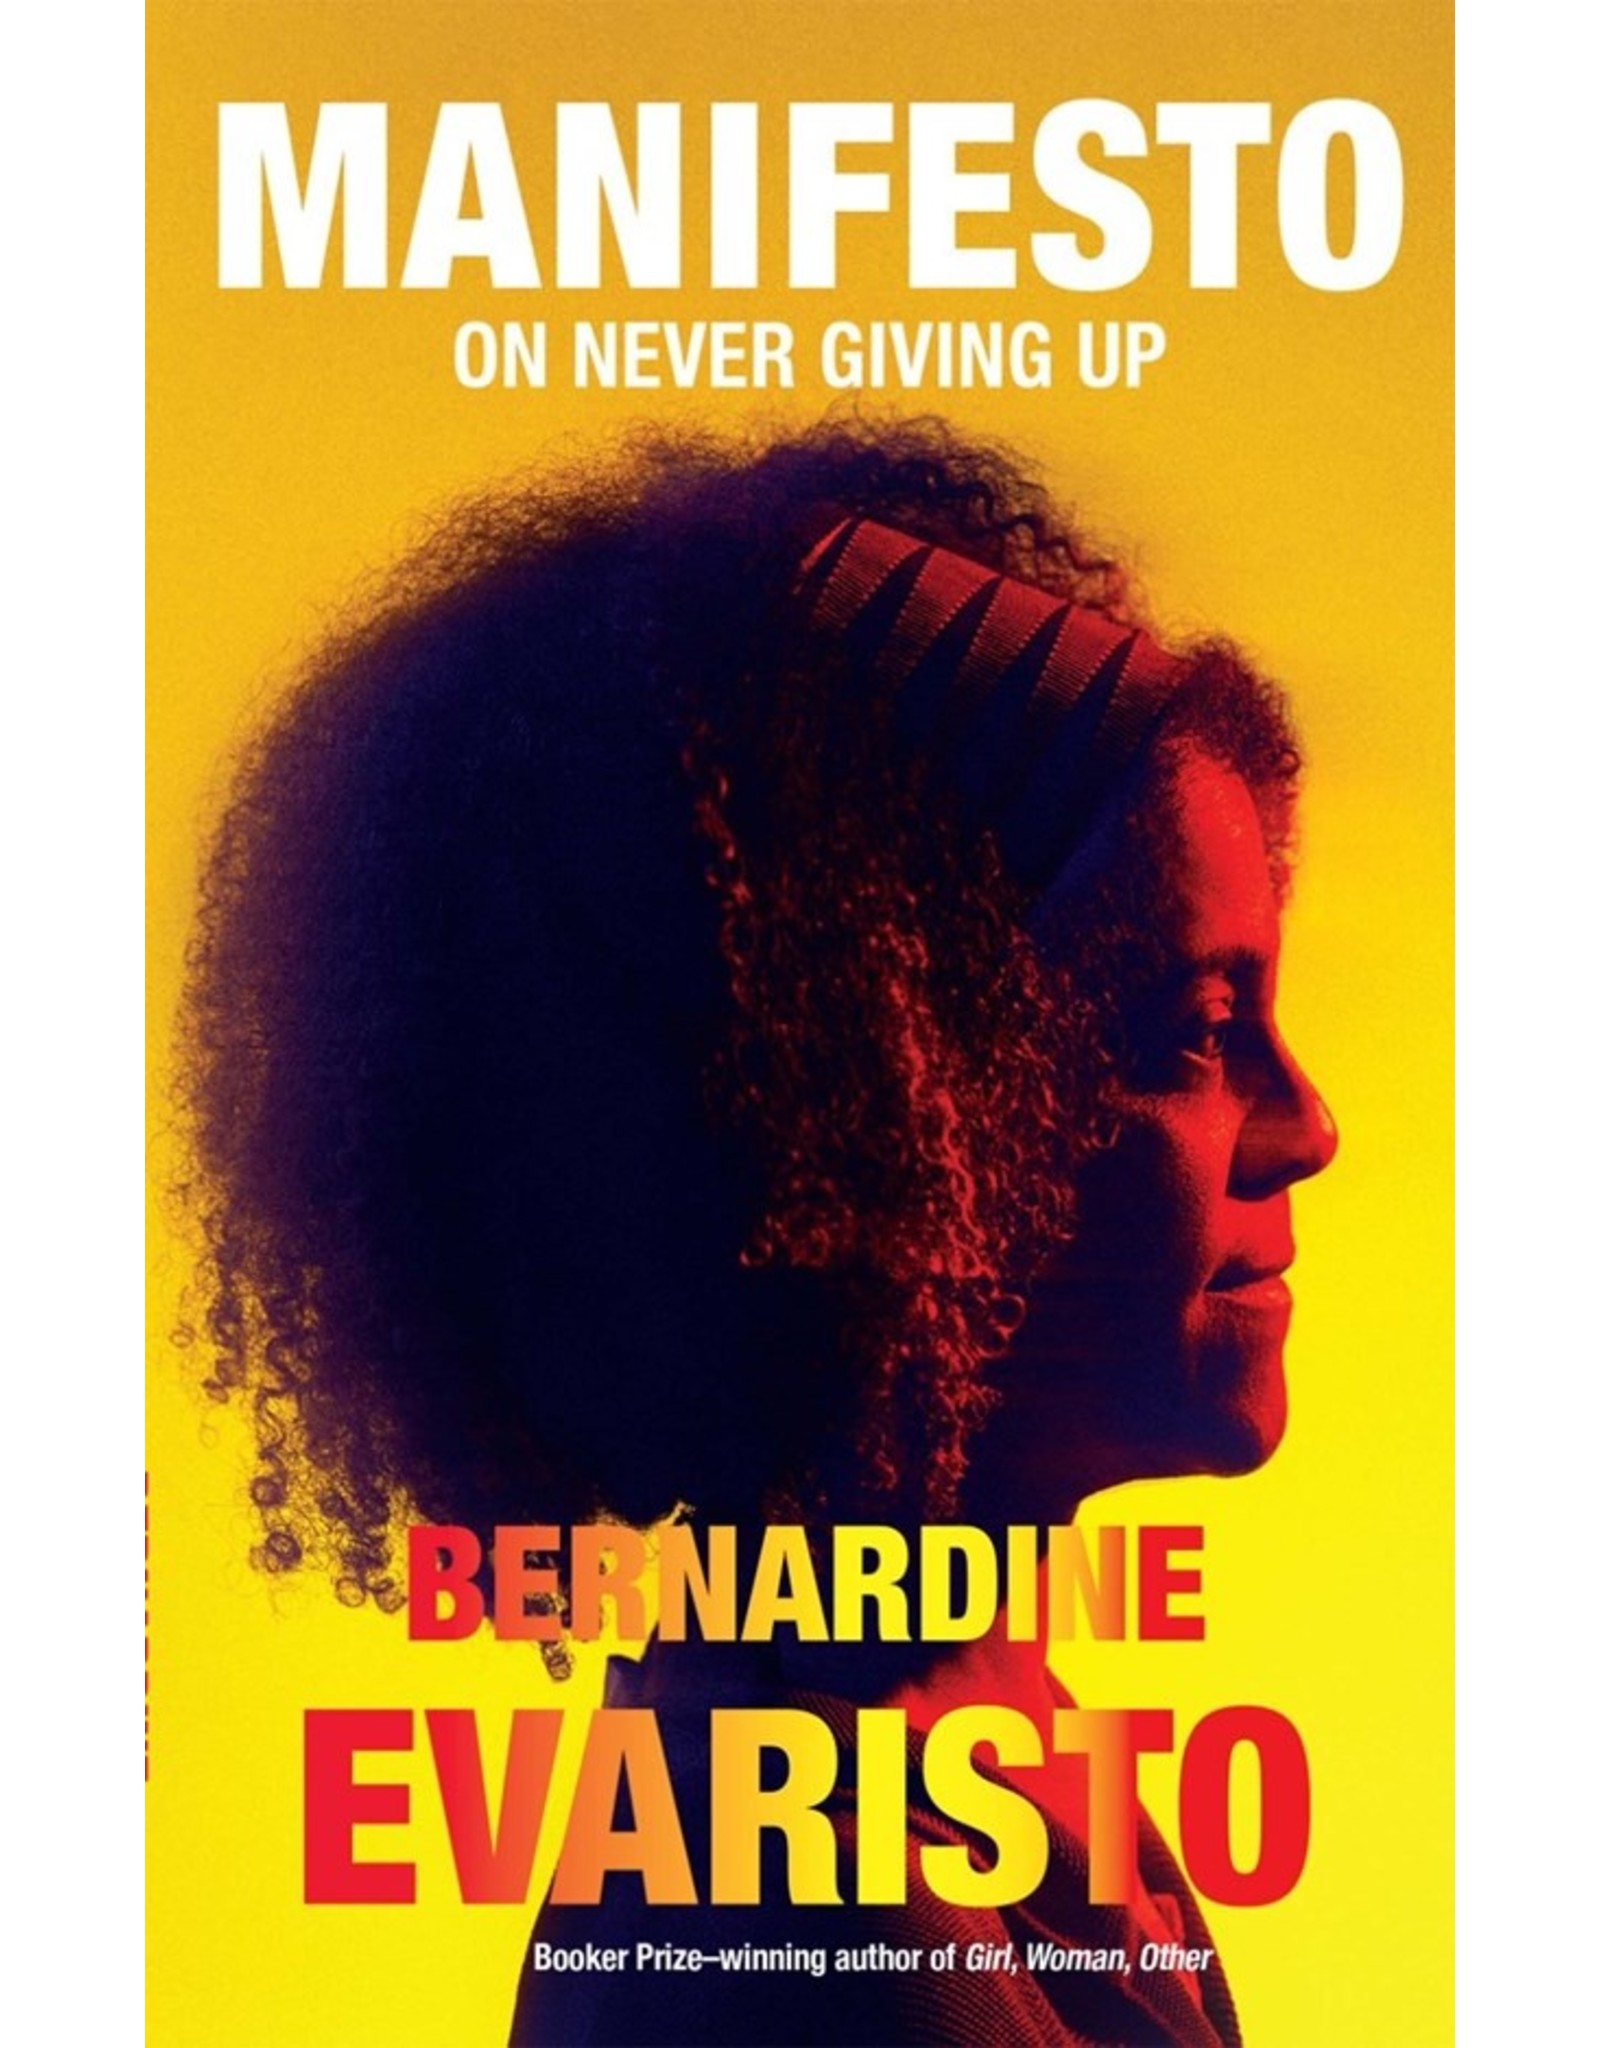 Books Manifesto on Never Giving Up by Bernardine Evaristo